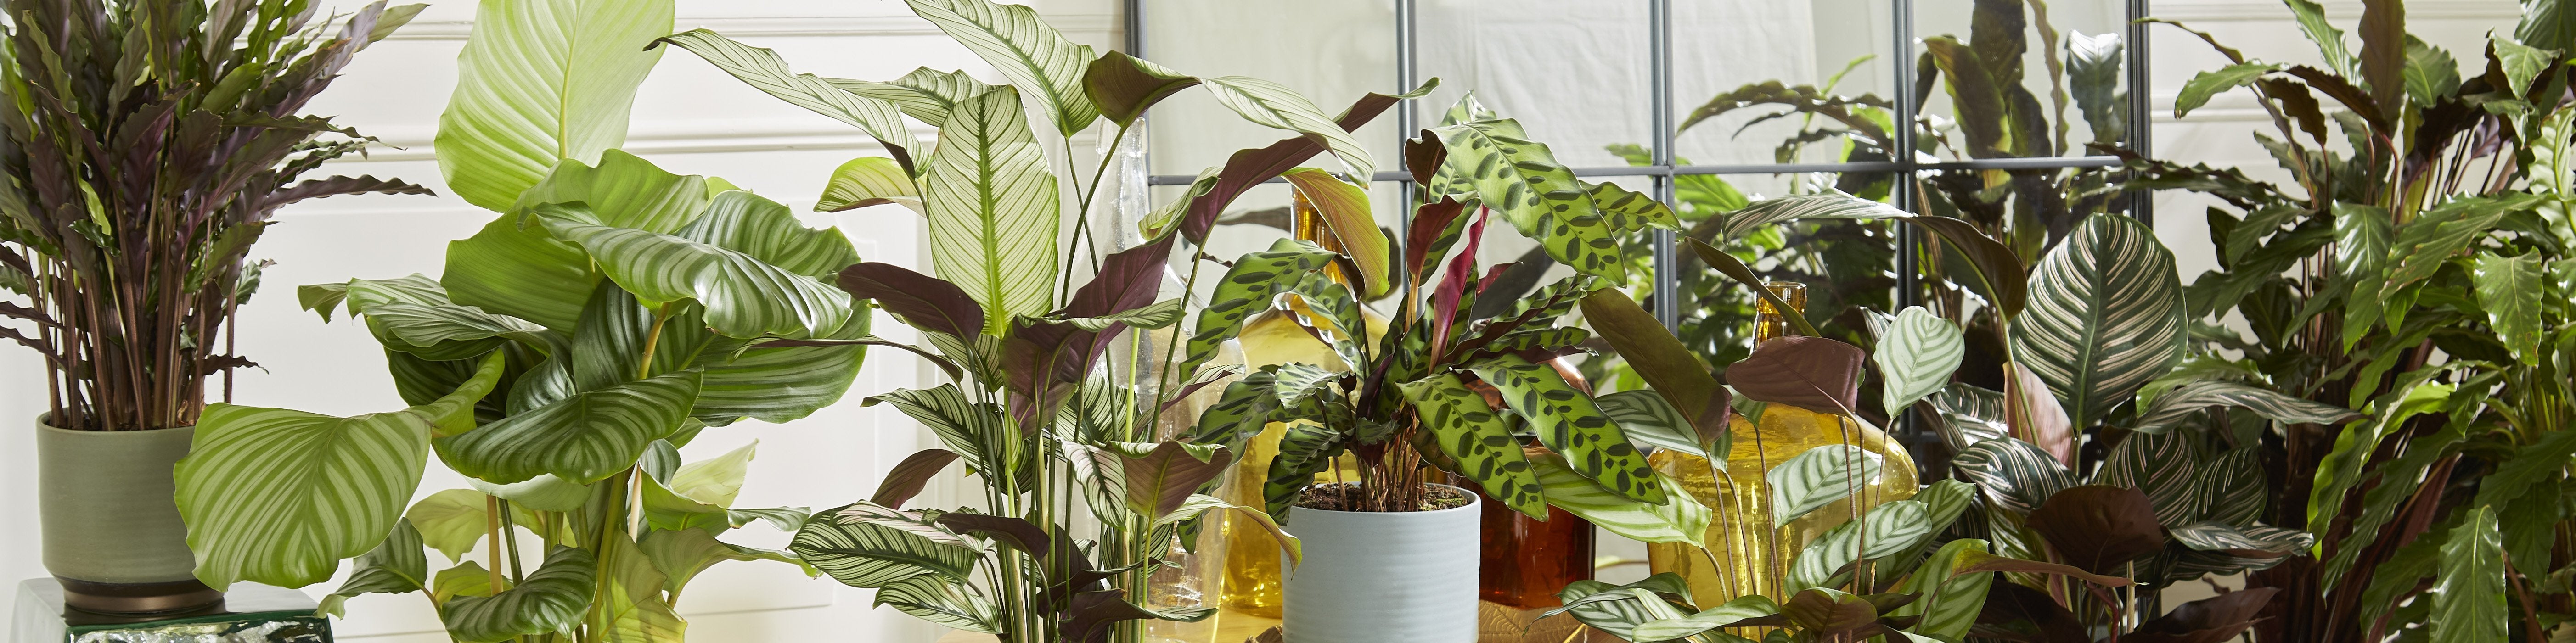 Calathea for Sale | Air Purifiying Plants Online | Bakker.com